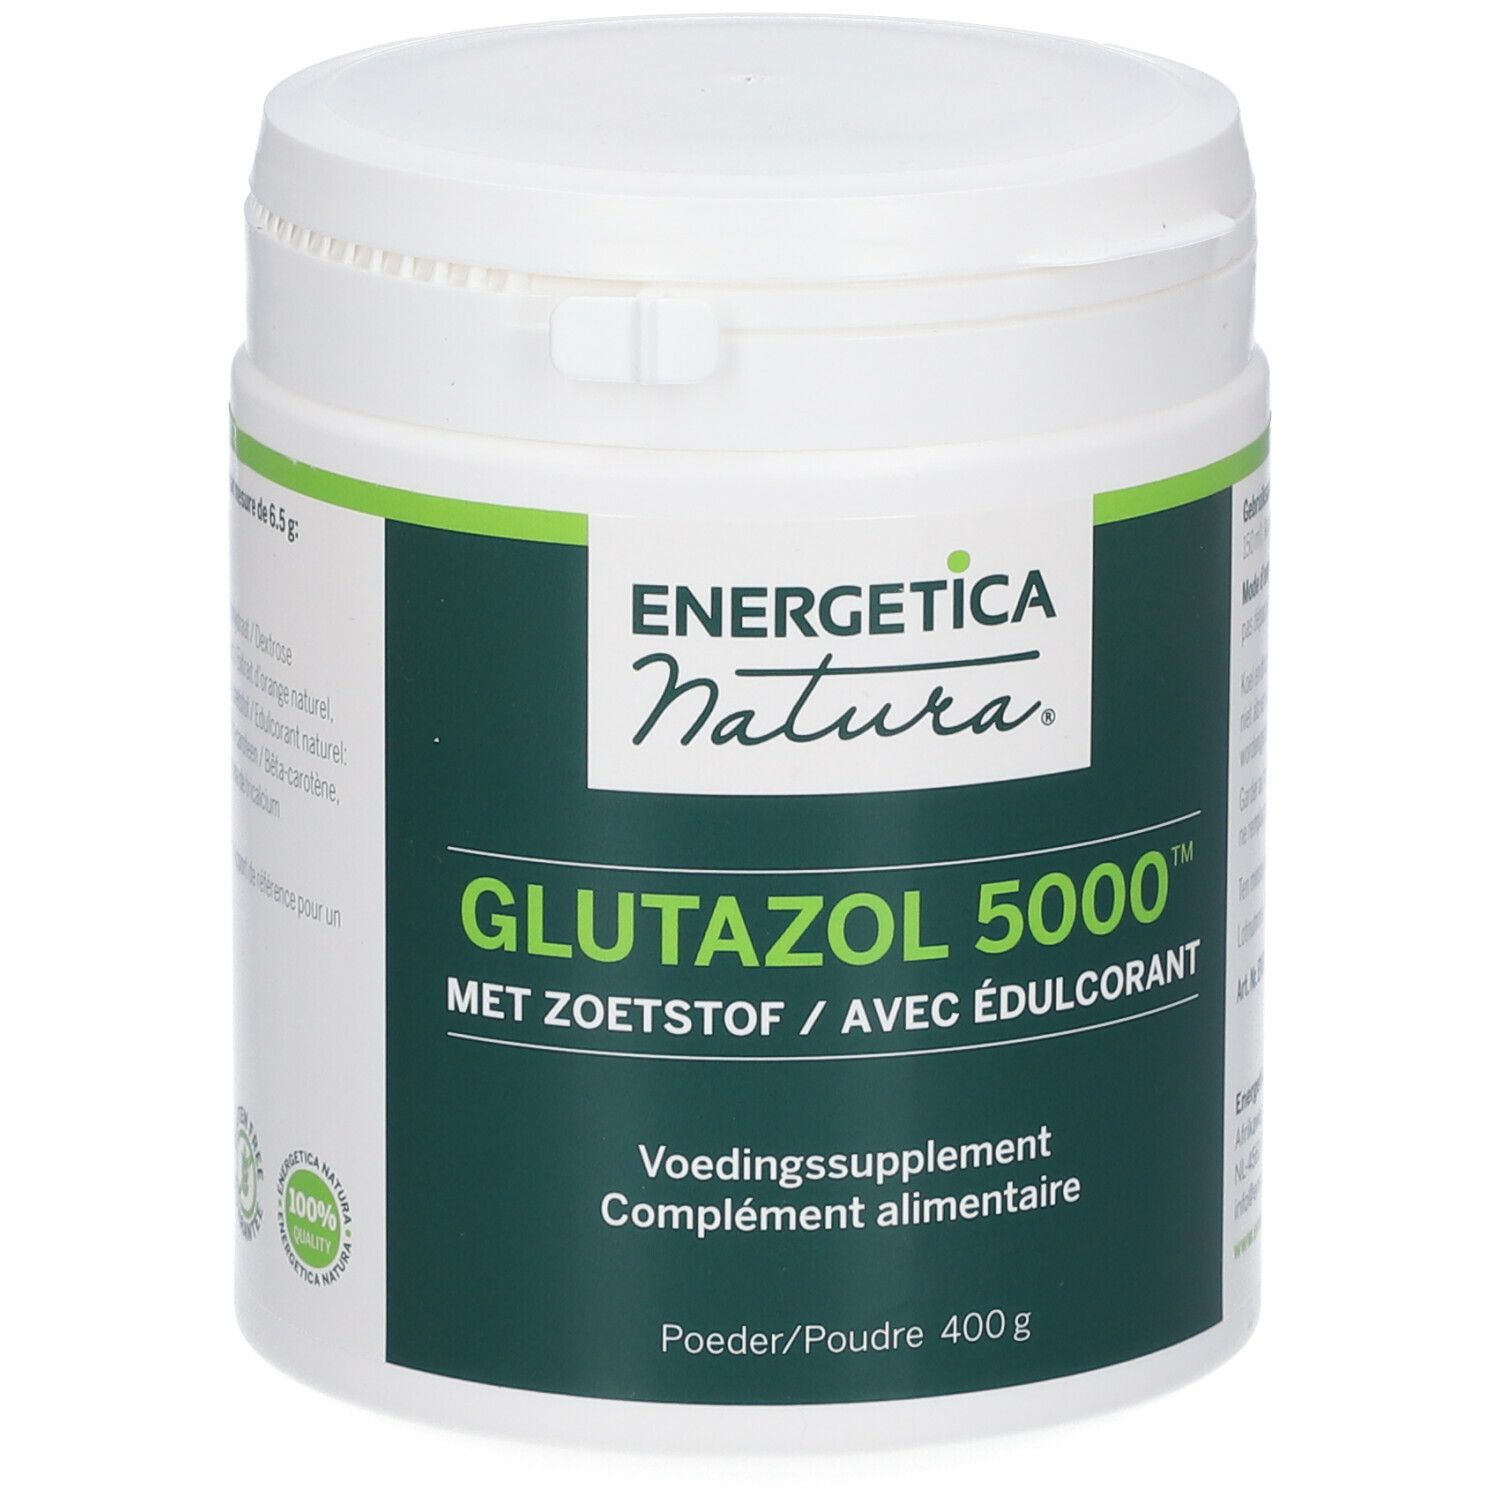 ENERGETICA® NATURA GLUTAZOL 5000™